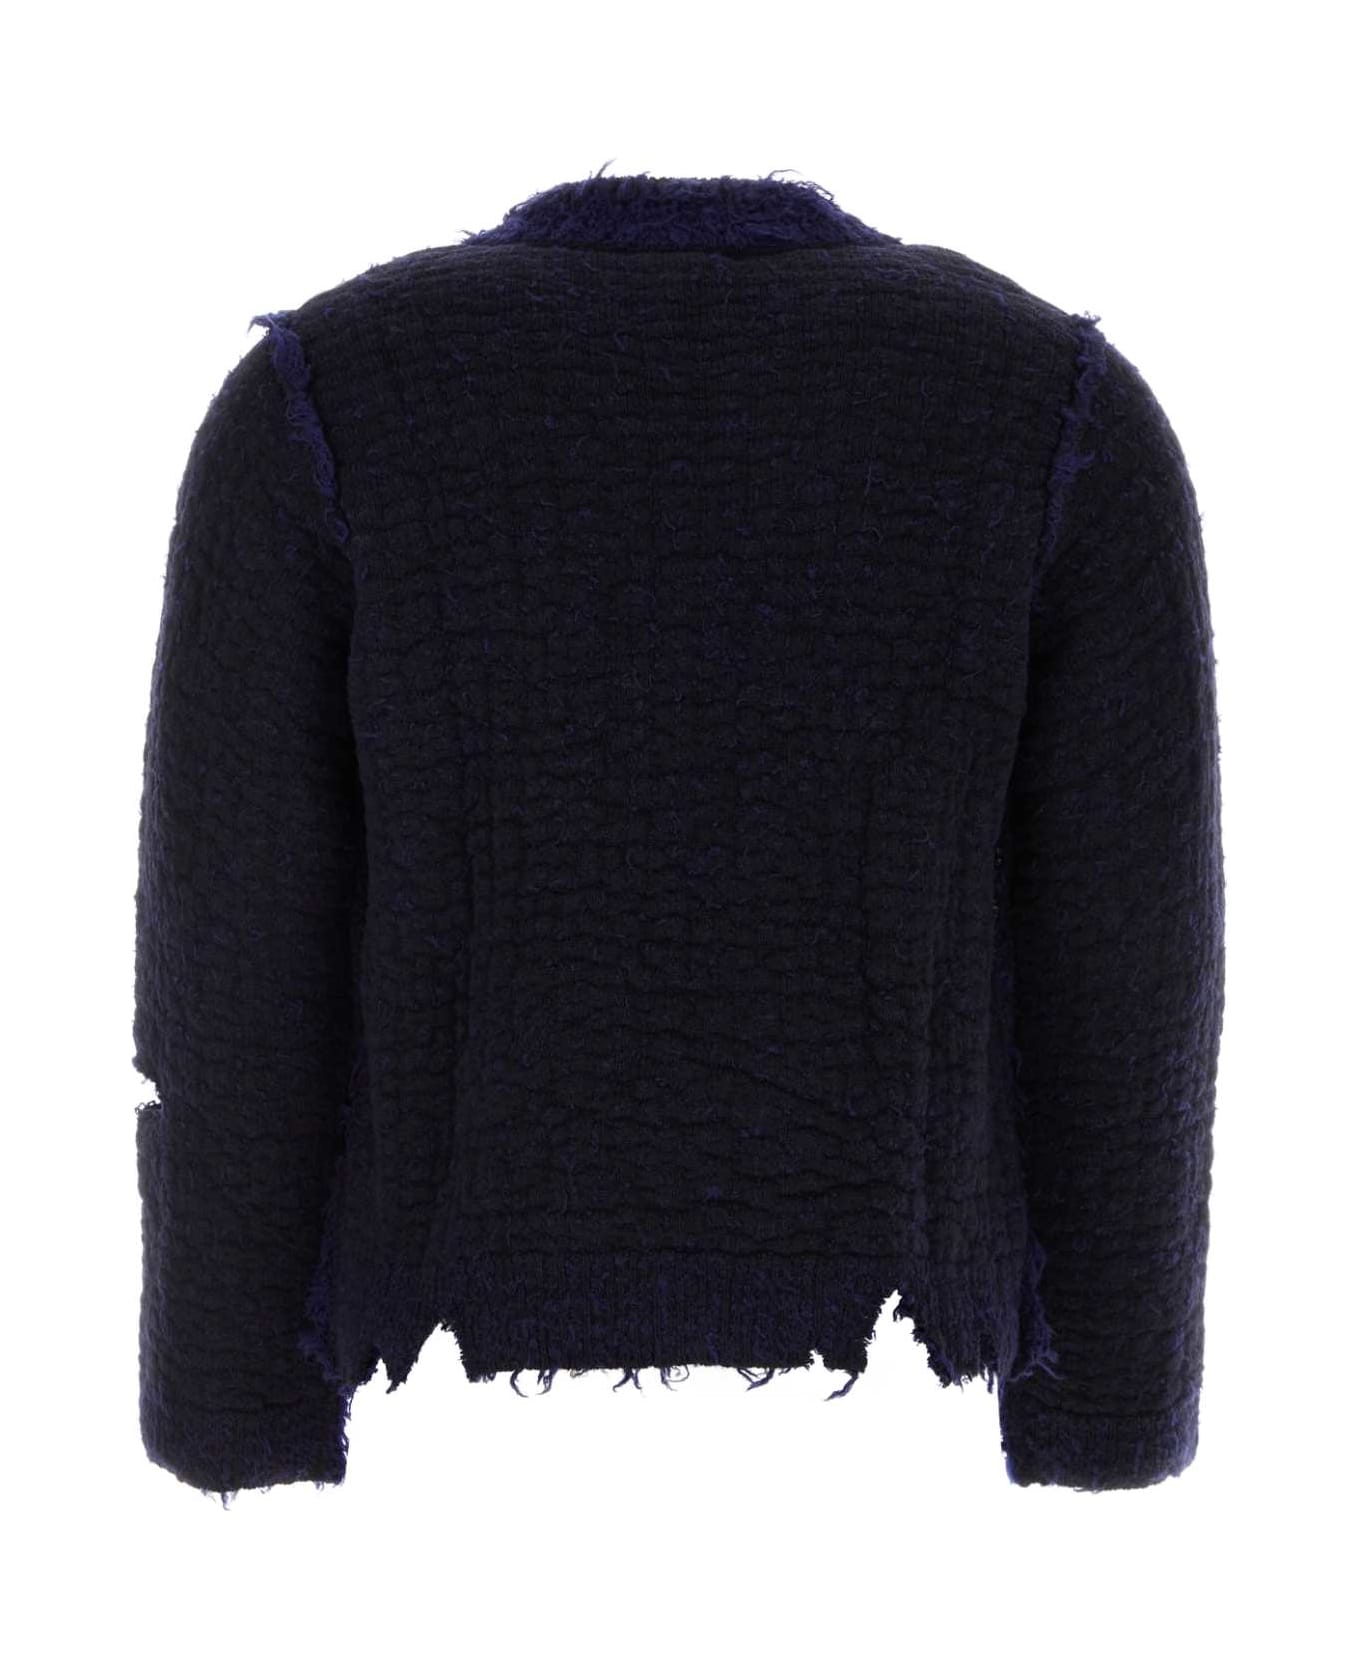 Namacheko Two-tone Wool Blend Sweater - NAVY ニットウェア